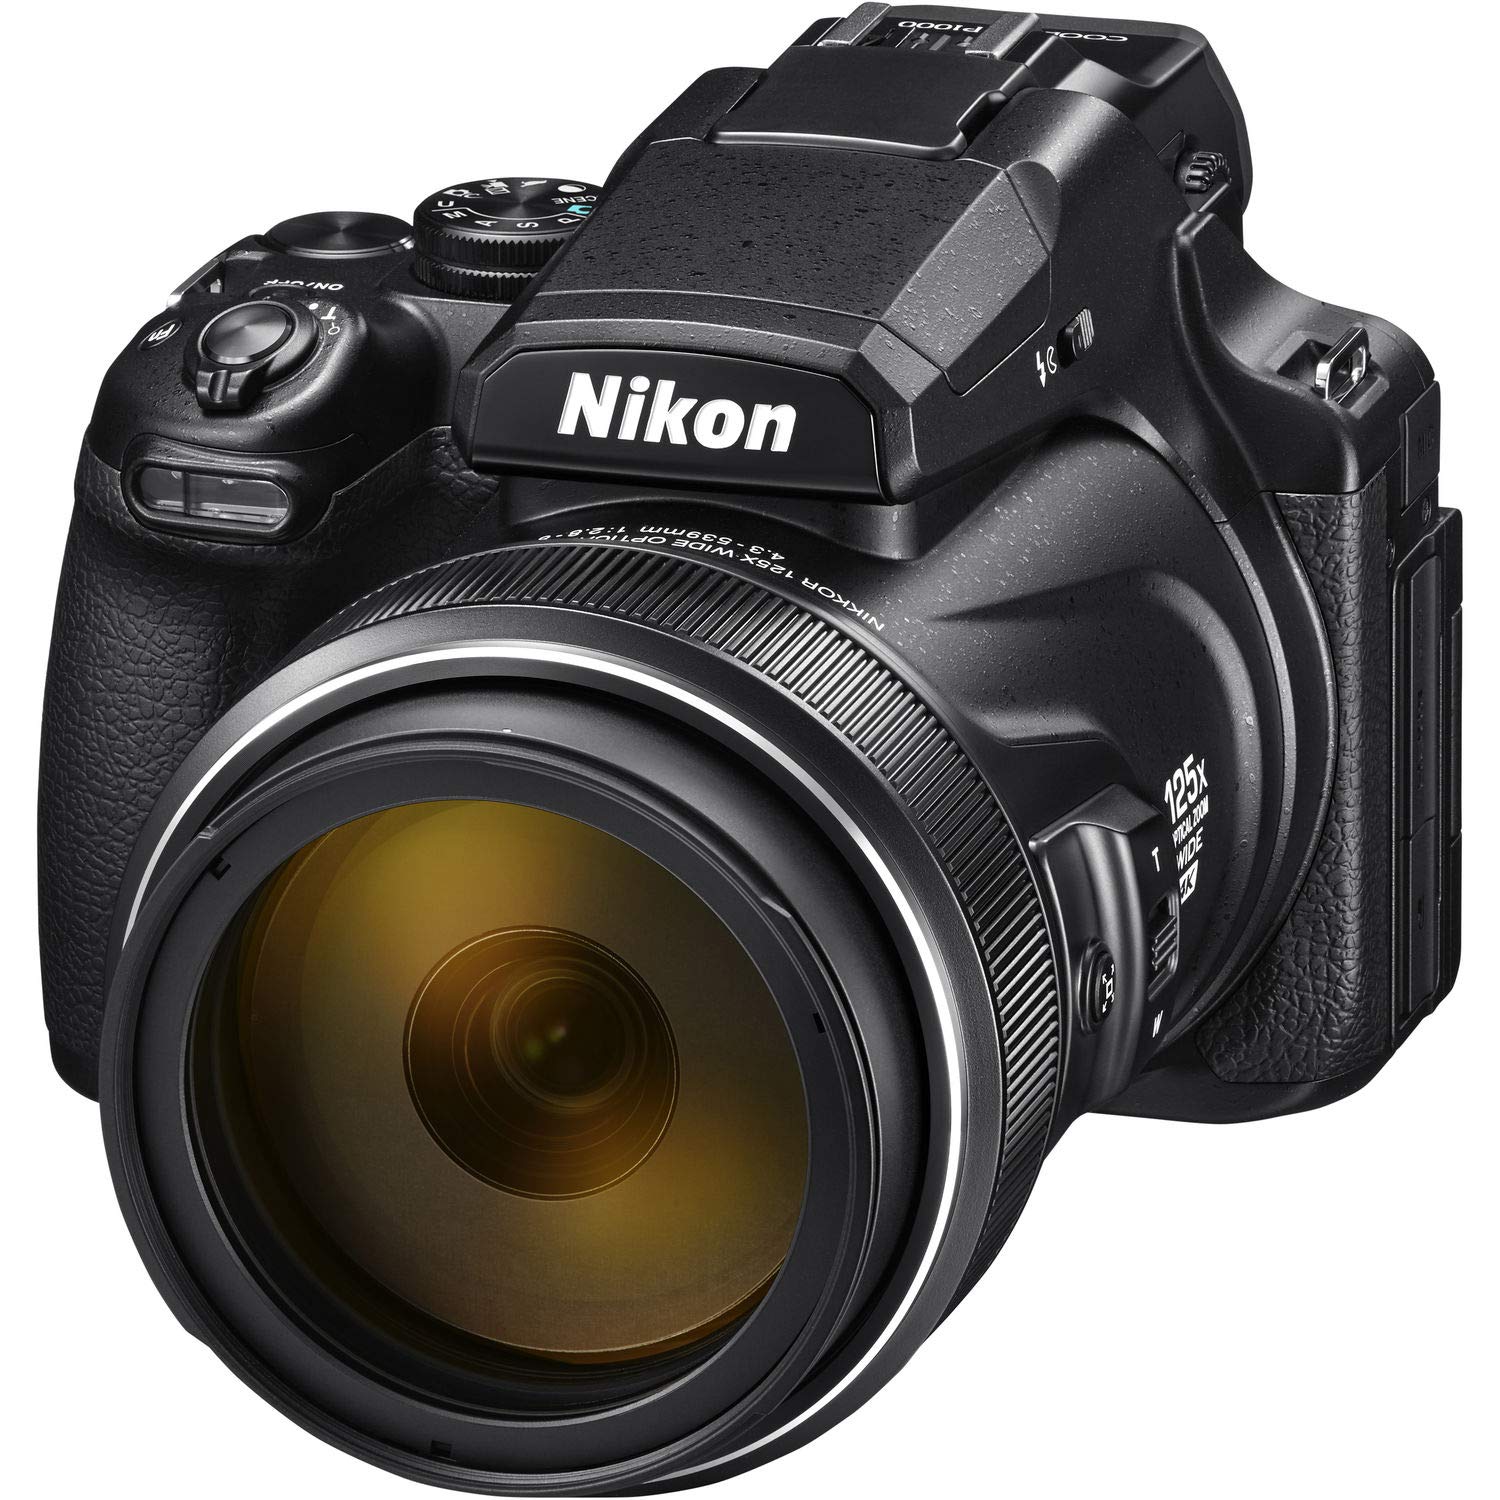 Nikon COOLPIX P1000 Digital Camera + 64GB Sandisk Extreme Memory Card Travel Bundle International Model